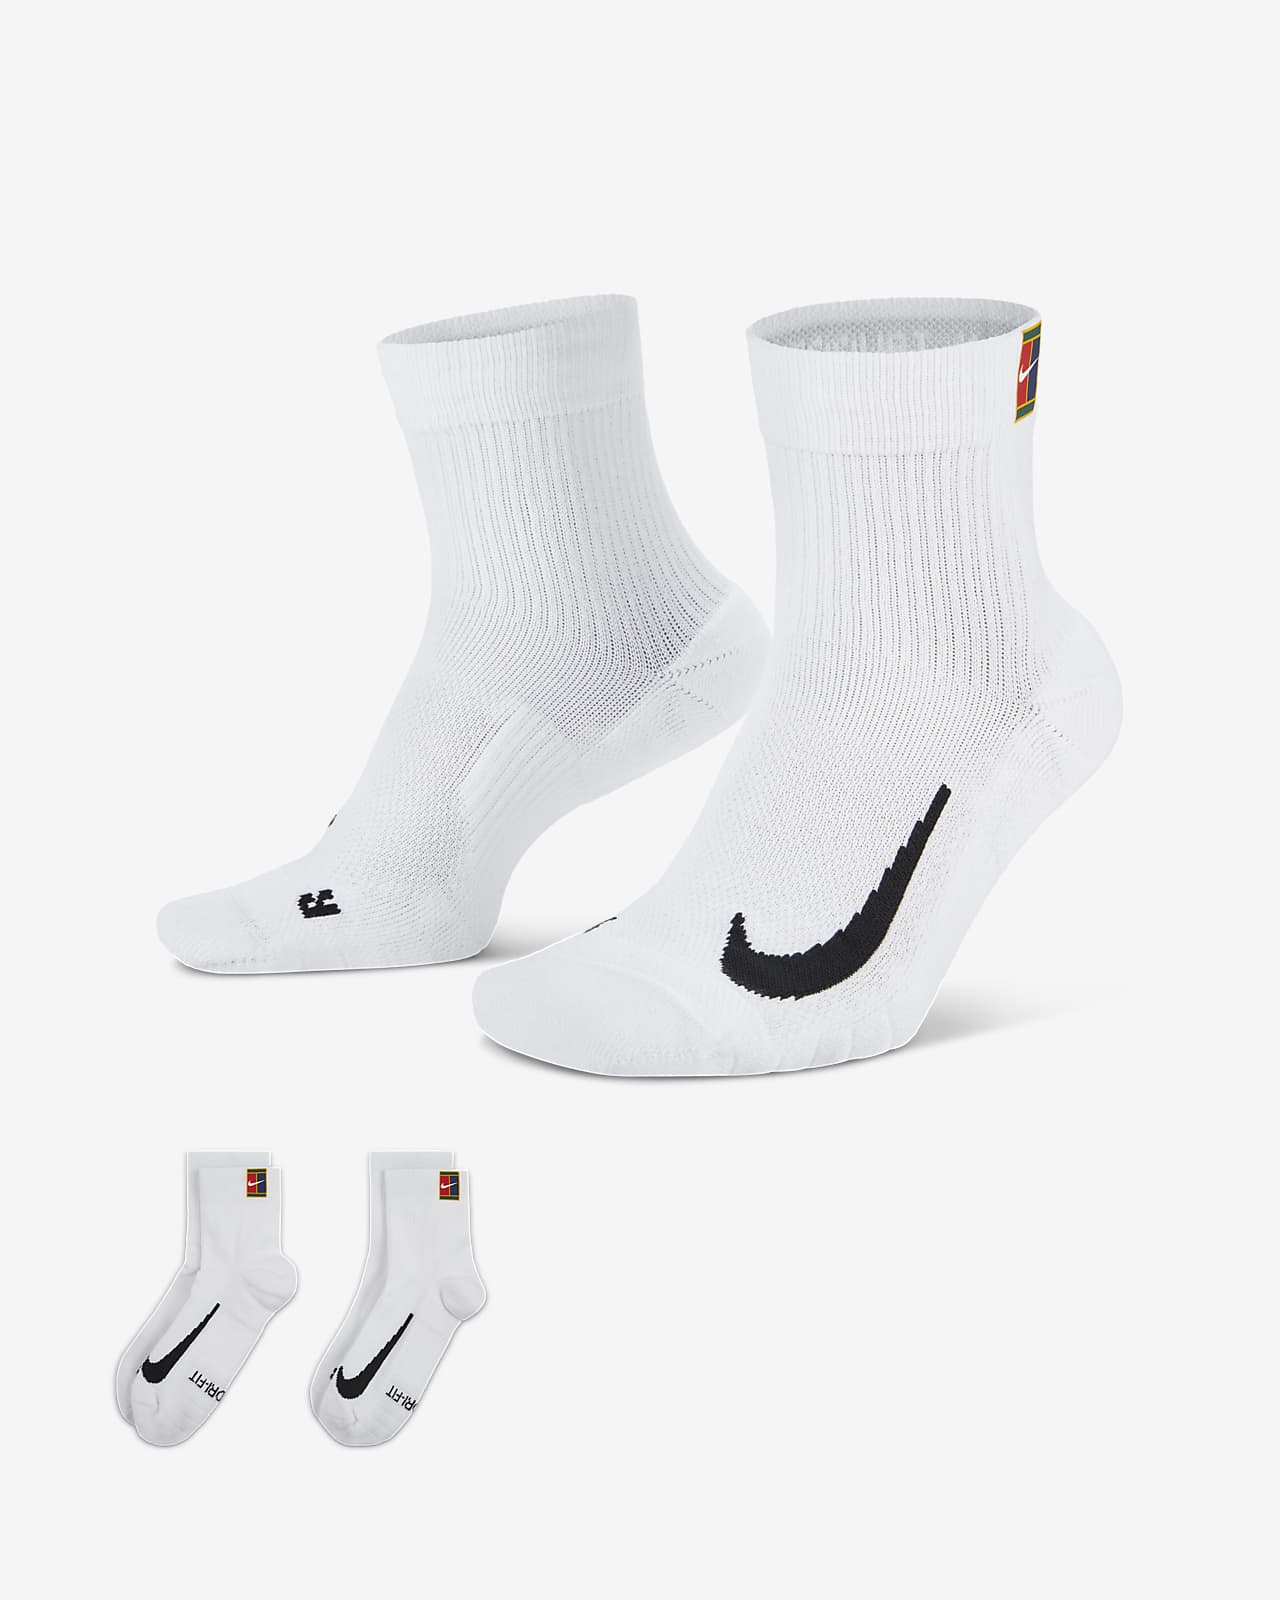 NikeCourt Multiplier Max Tennis Ankle Socks (2 Pairs)